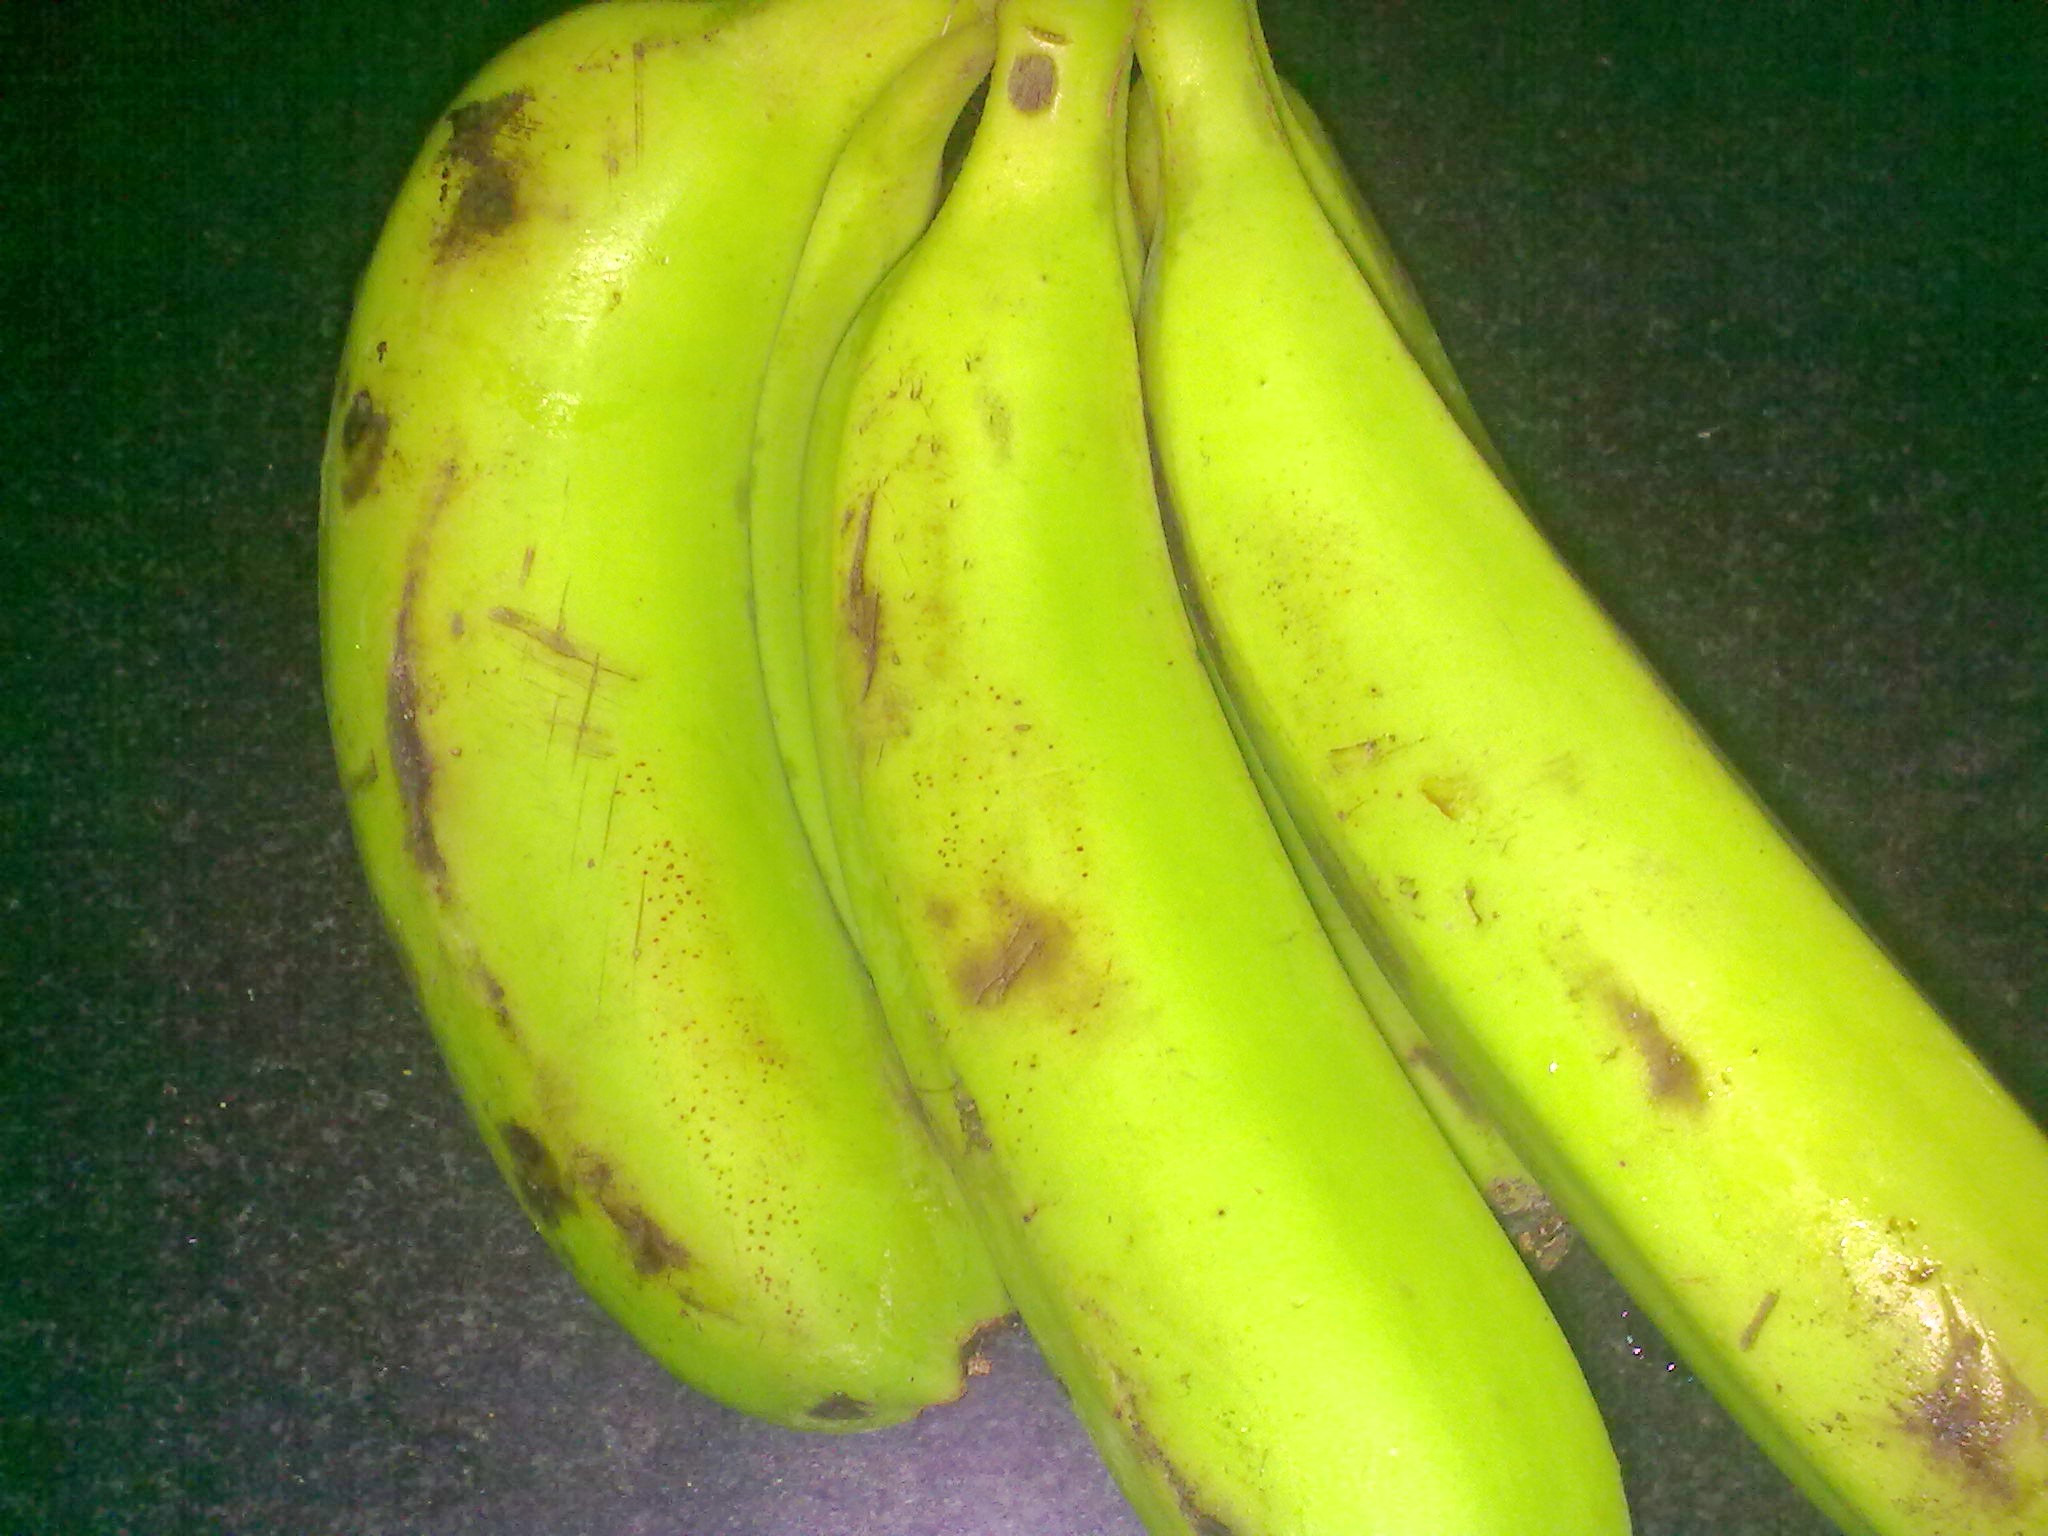 Green bananas photo